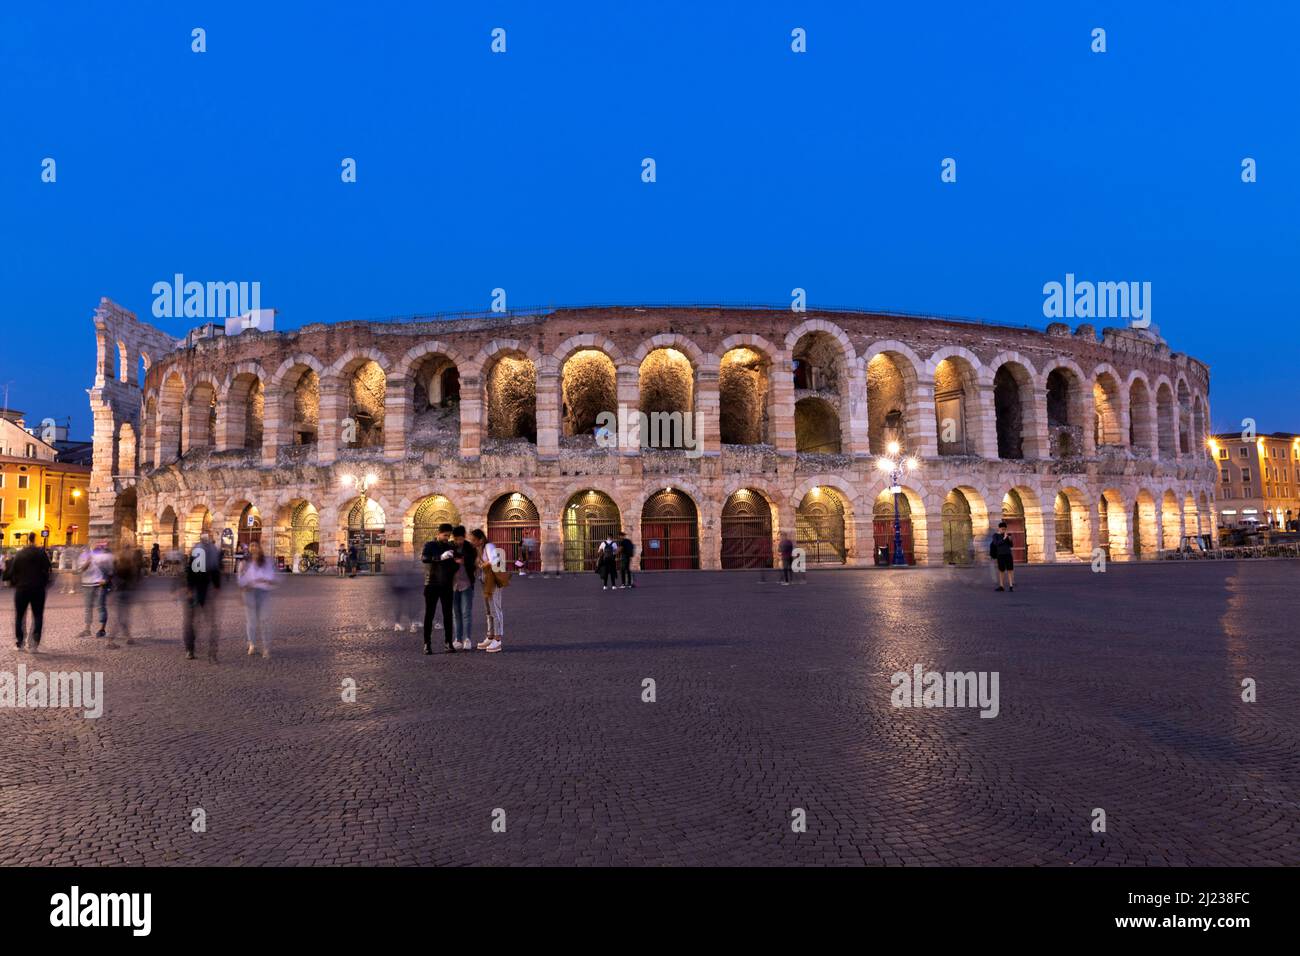 Italy, Verona, the Arena di Verona, a Roman amphitheatre at dusk with people. Stock Photo